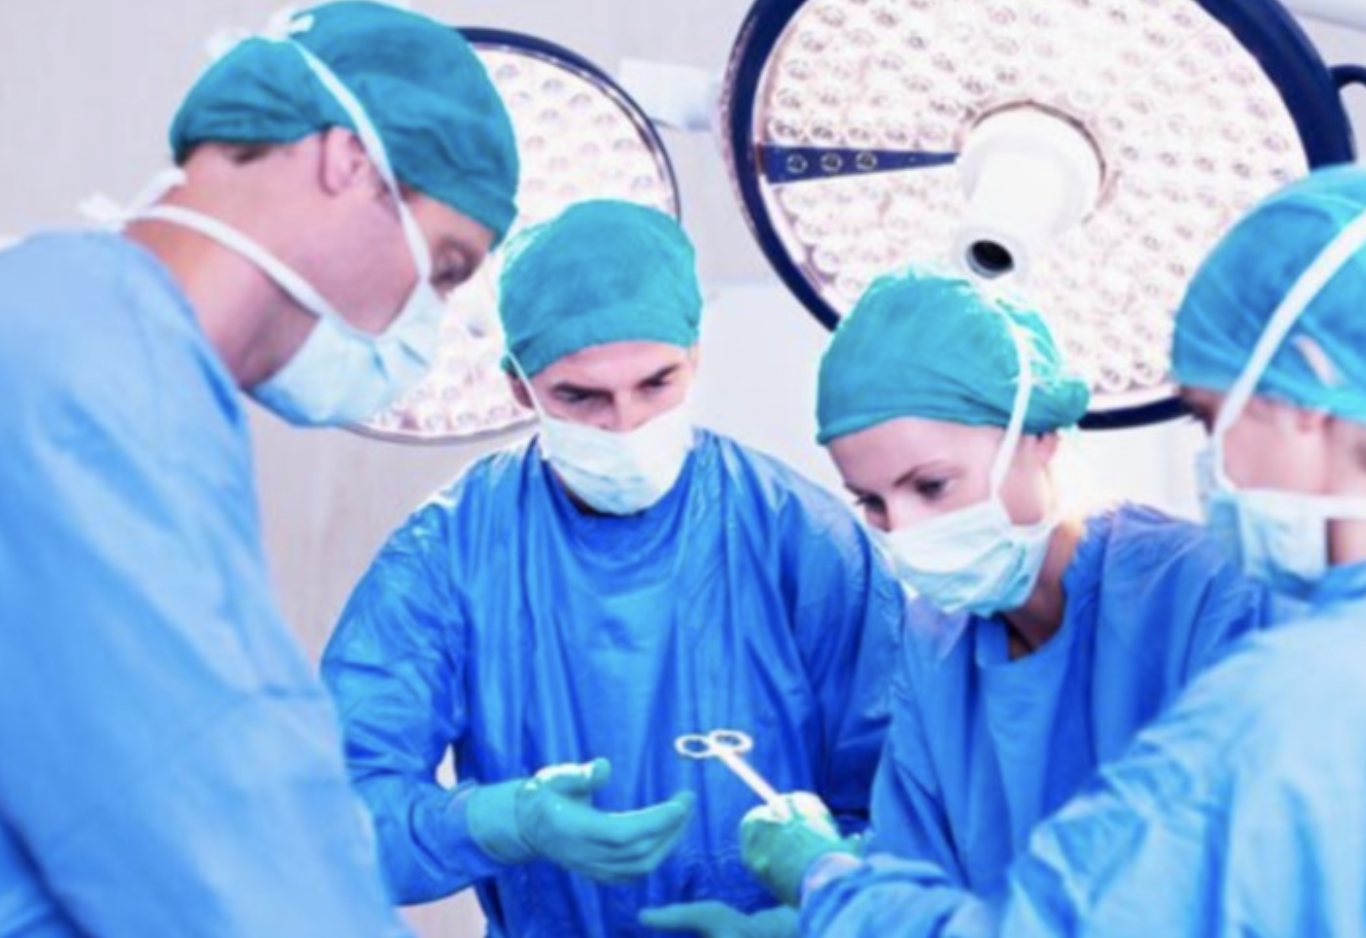 Os médicos utilizam roupas verdes ou azuis nas salas de cirurgia por estes motivos